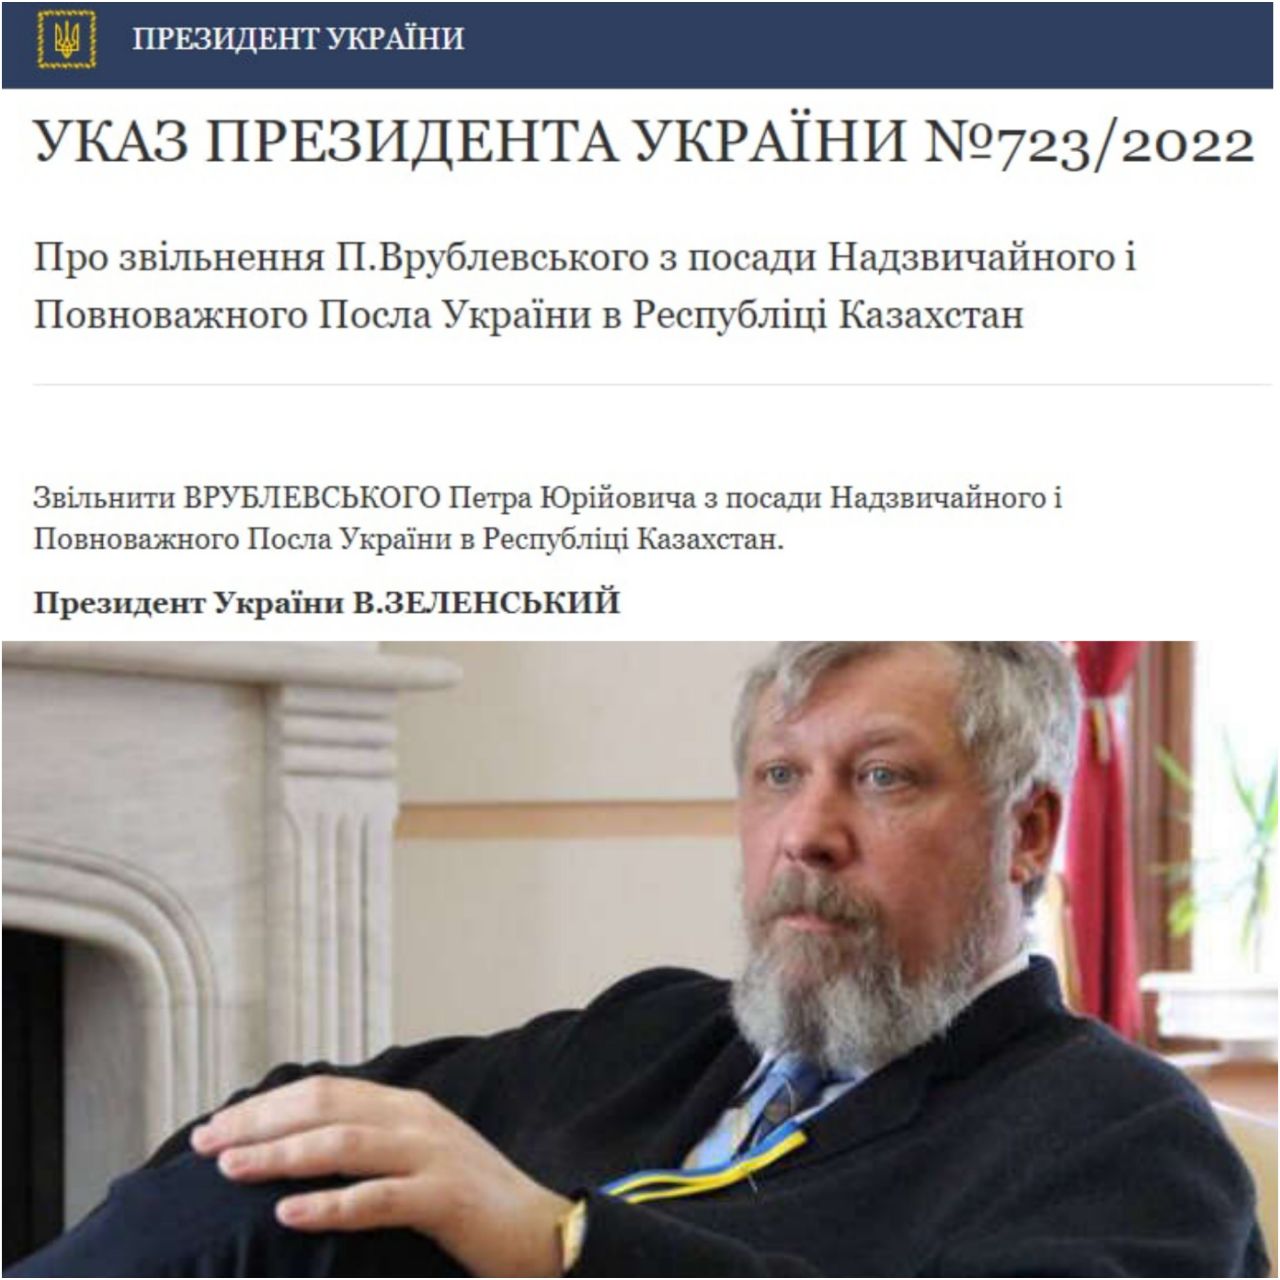 Зеленский отправил в отставку посла Украины в Казахстане Петра Врублевского, - указ на сайте Офиса президента 